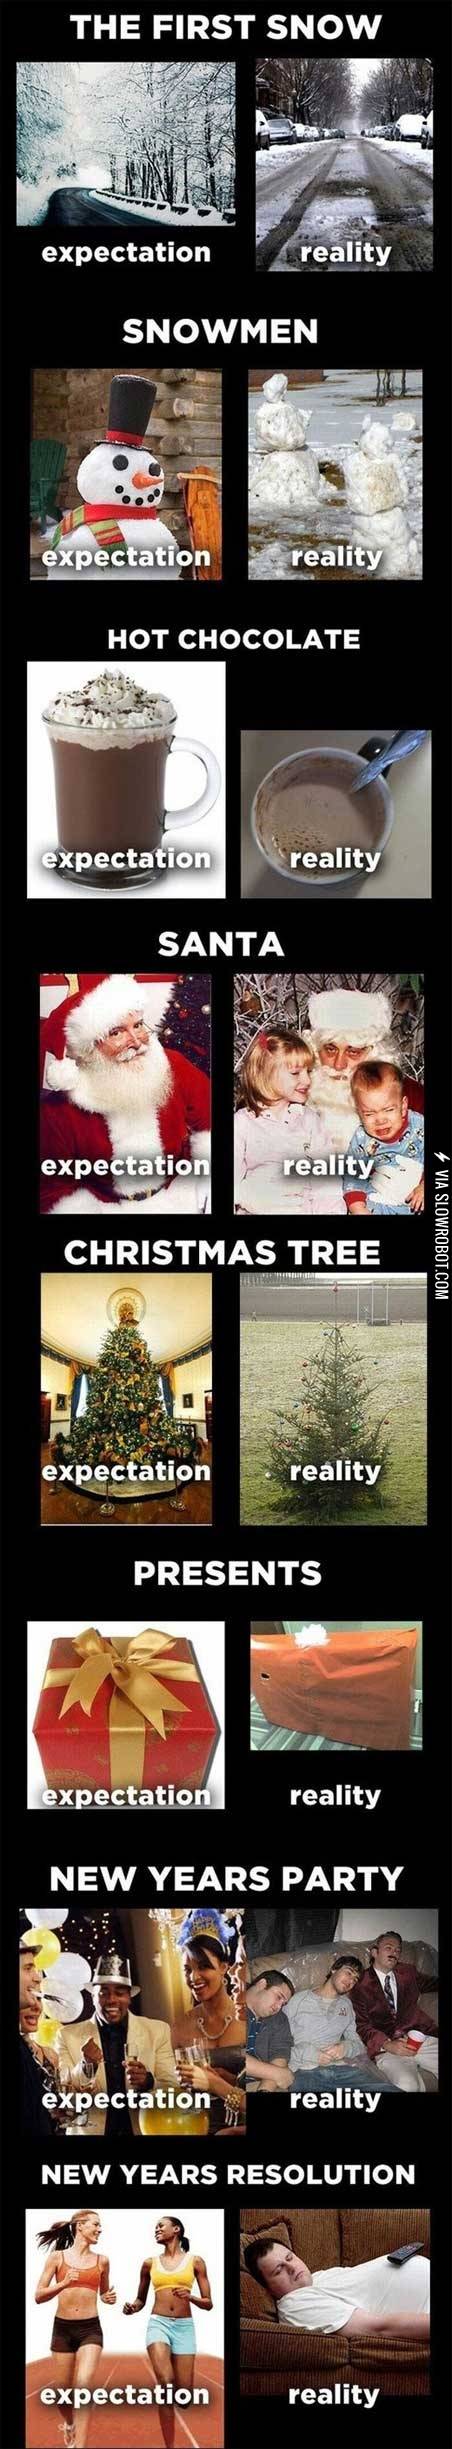 The+holidays%3A+expectations+vs.+reality.